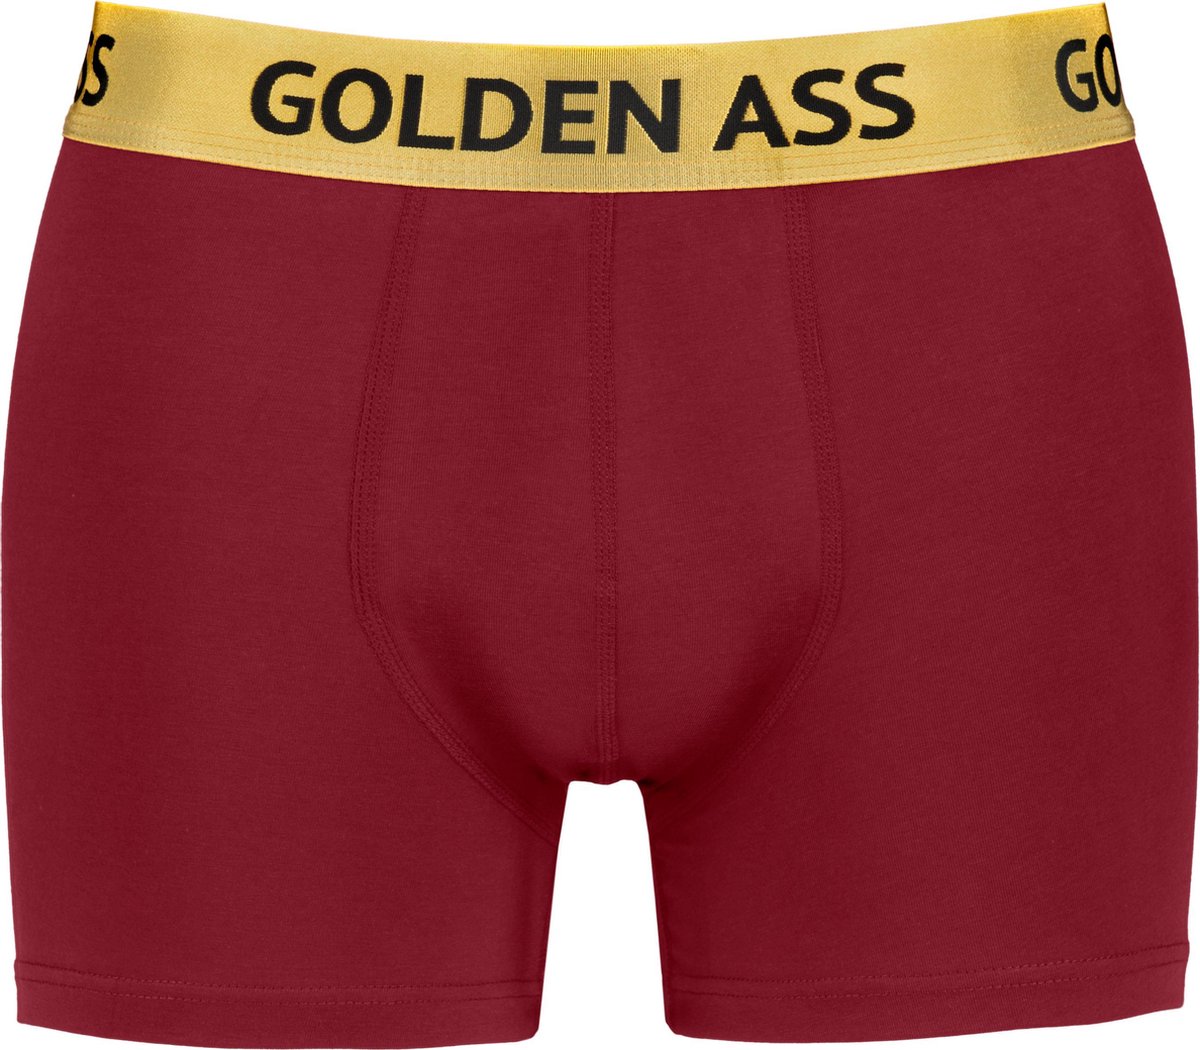 Golden Ass - Heren boxershort rood XS